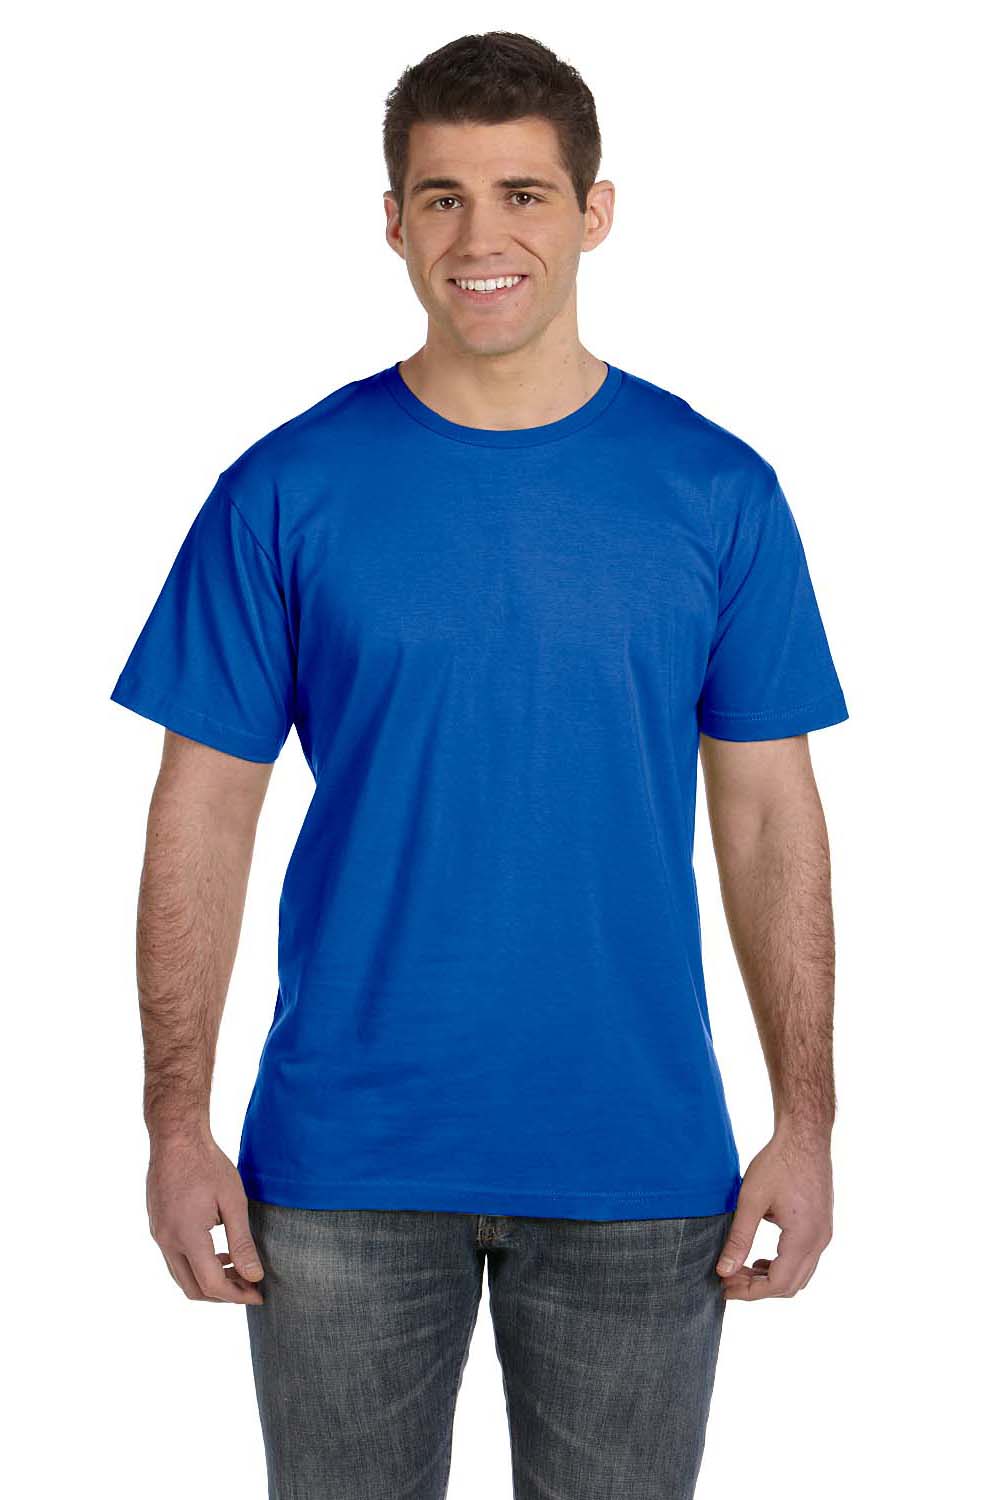 LAT 6901 Mens Fine Jersey Short Sleeve Crewneck T-Shirt Royal Blue Front